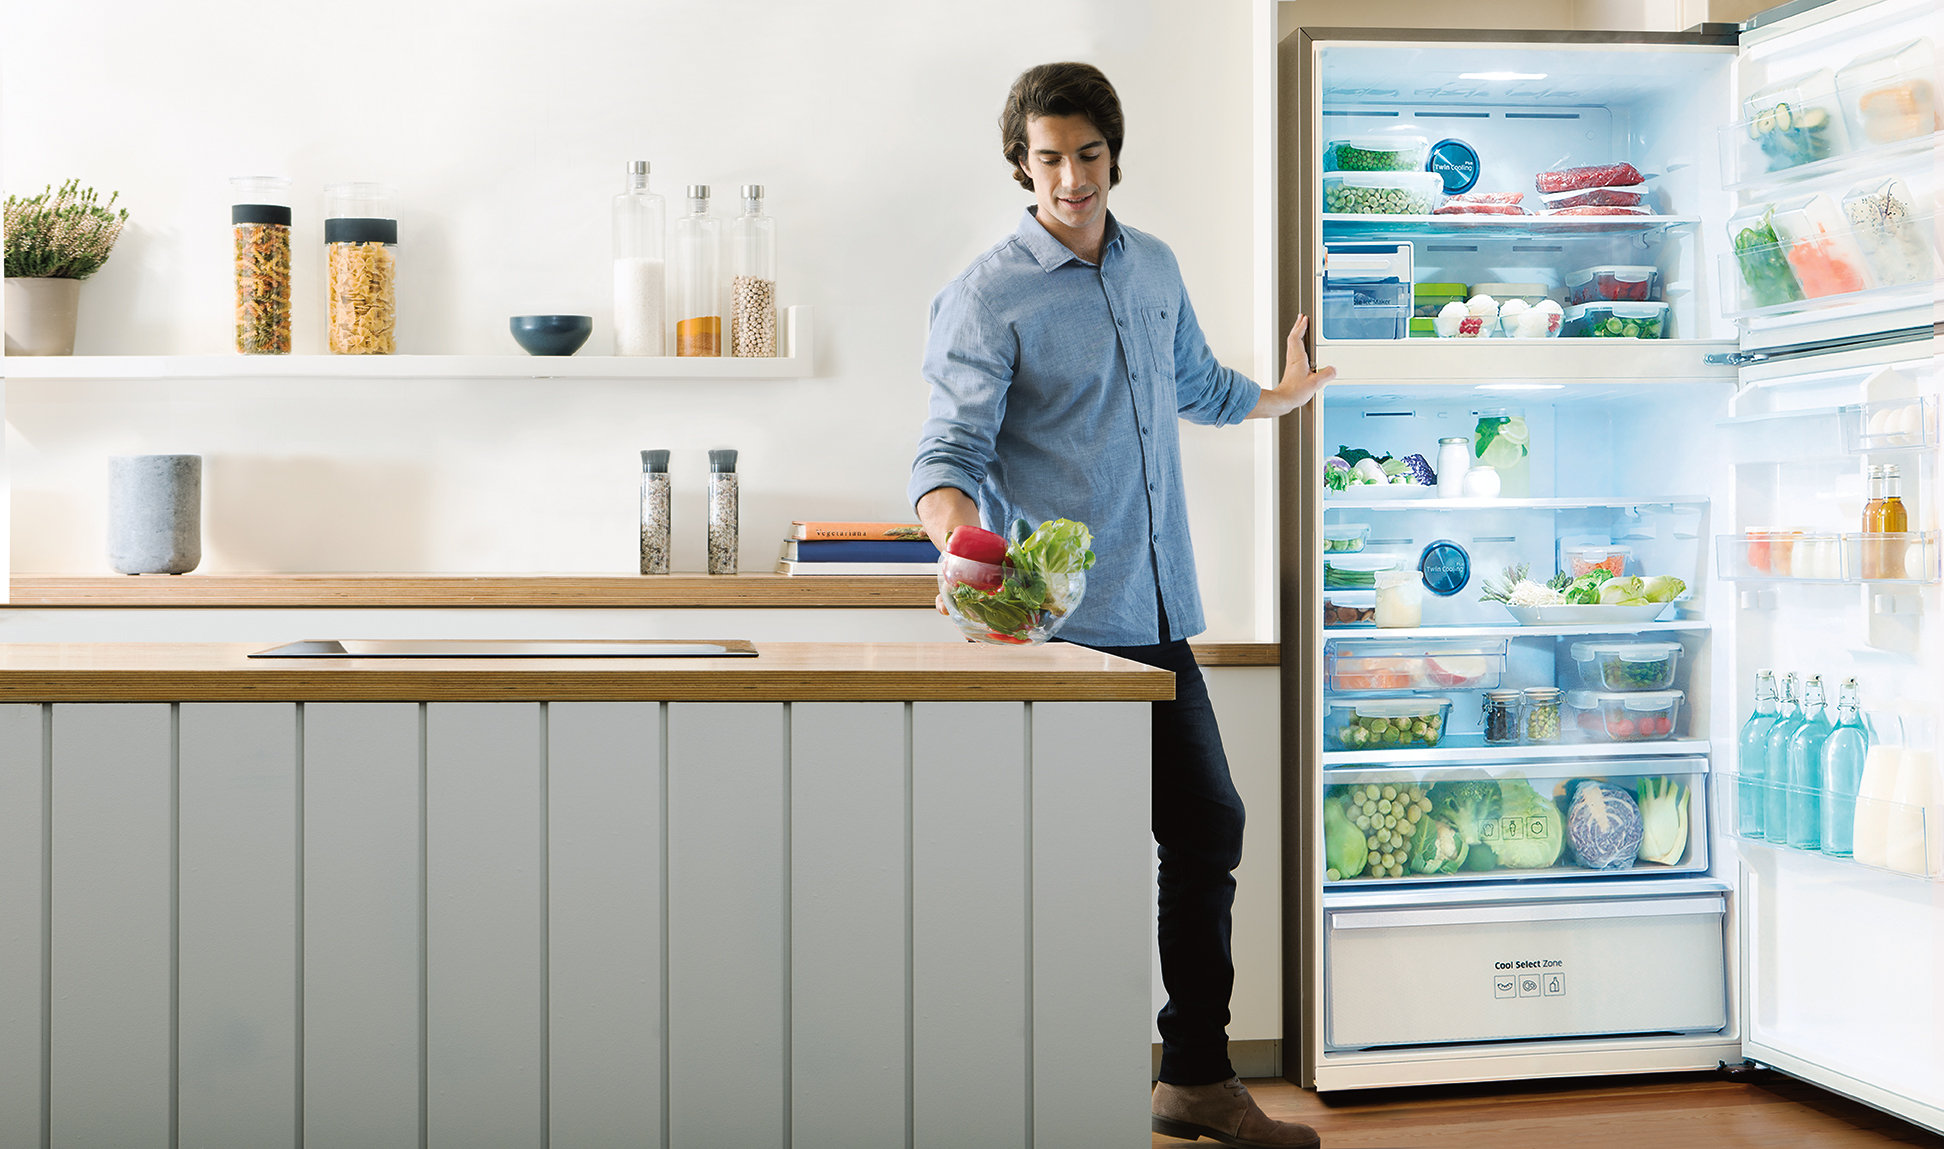 Сток холодильника. Холодильник. Красивый холодильник. Огромный холодильник для дома. Семейный холодильник.